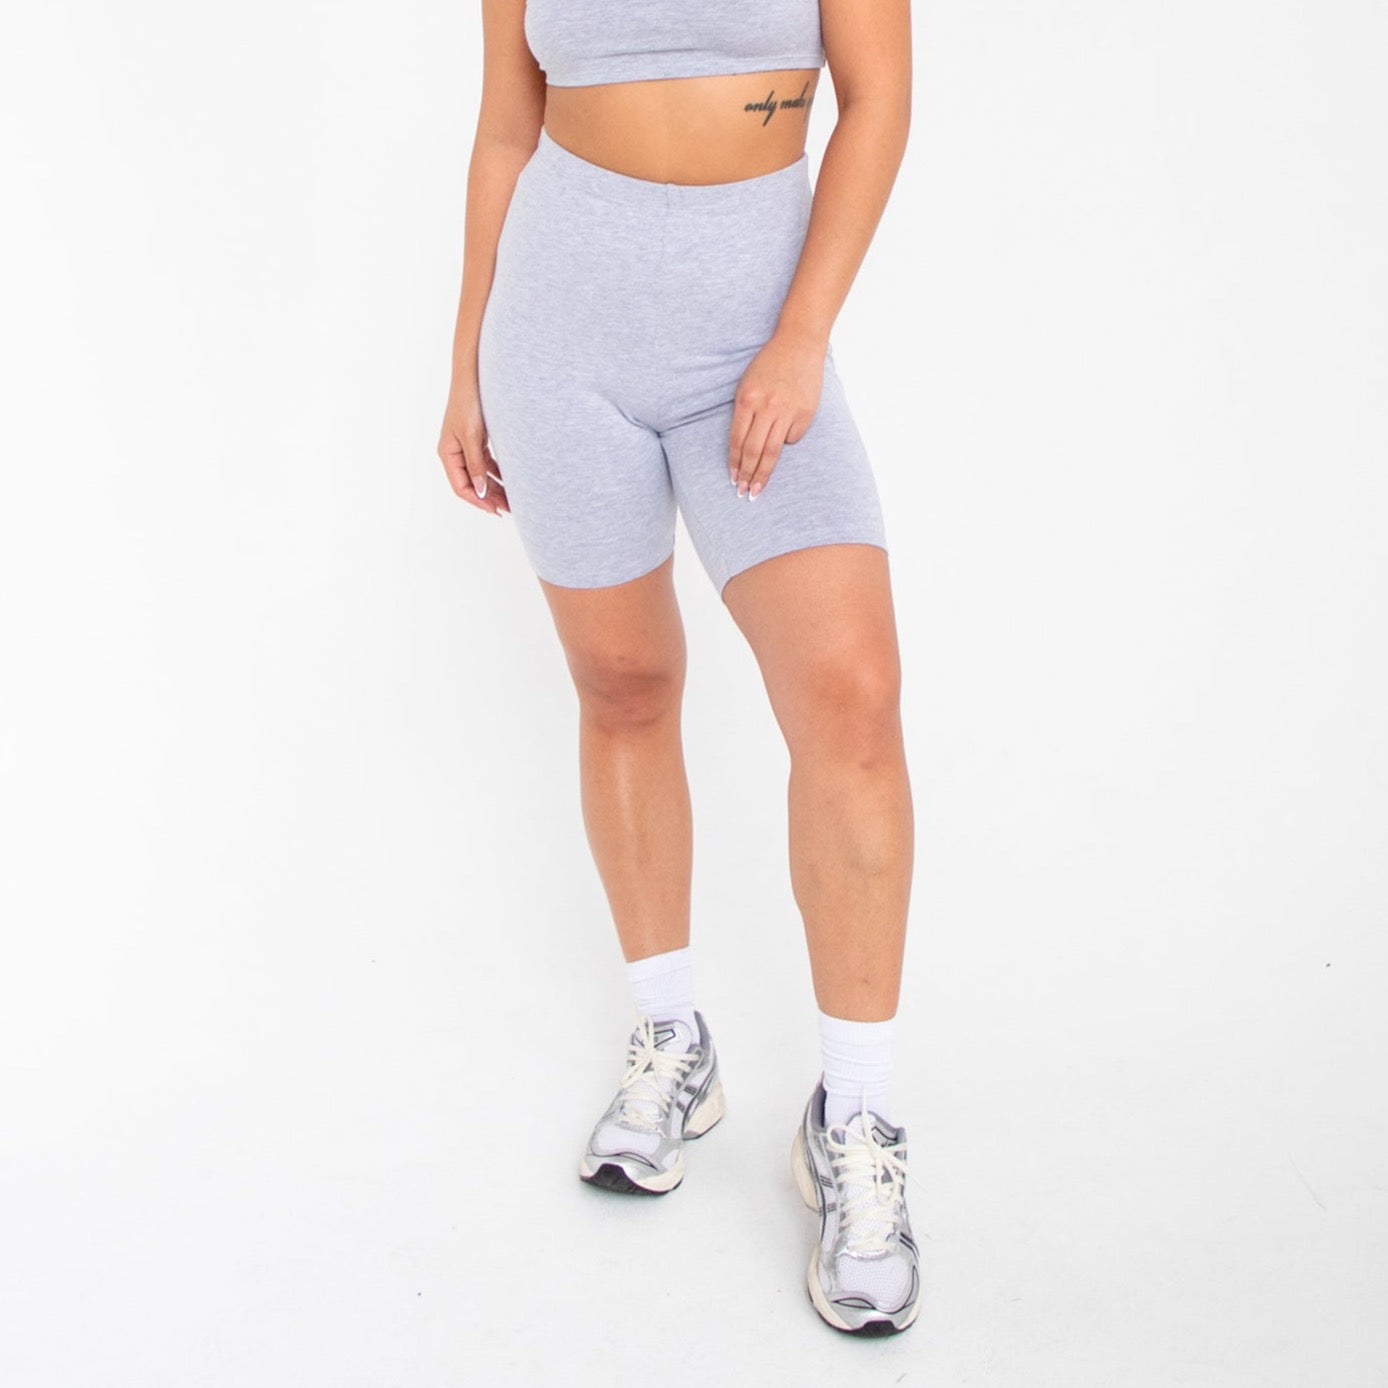 2012CS - Women's Cotton/Spandex Biker Shorts